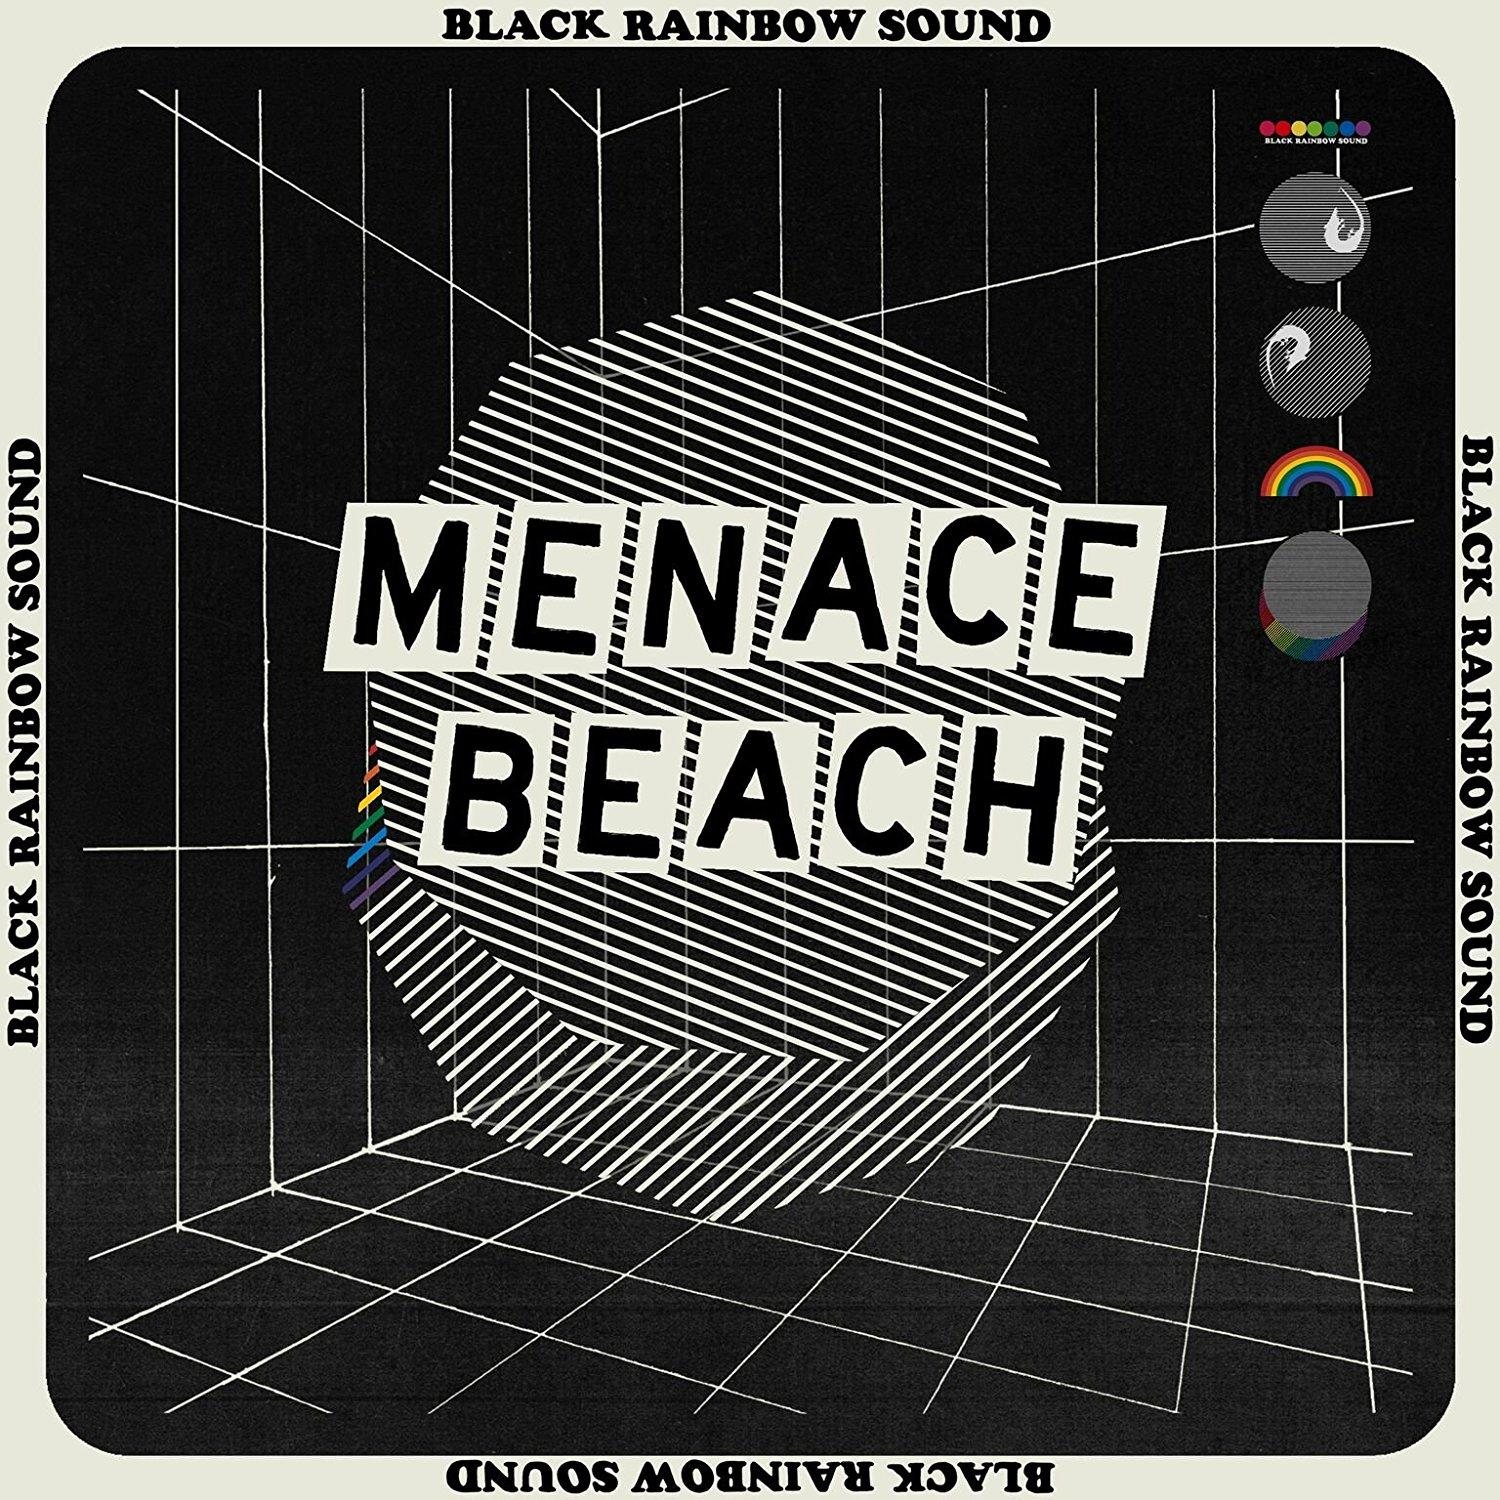 (CD) Sound - Black Rainbow Beach - Menace